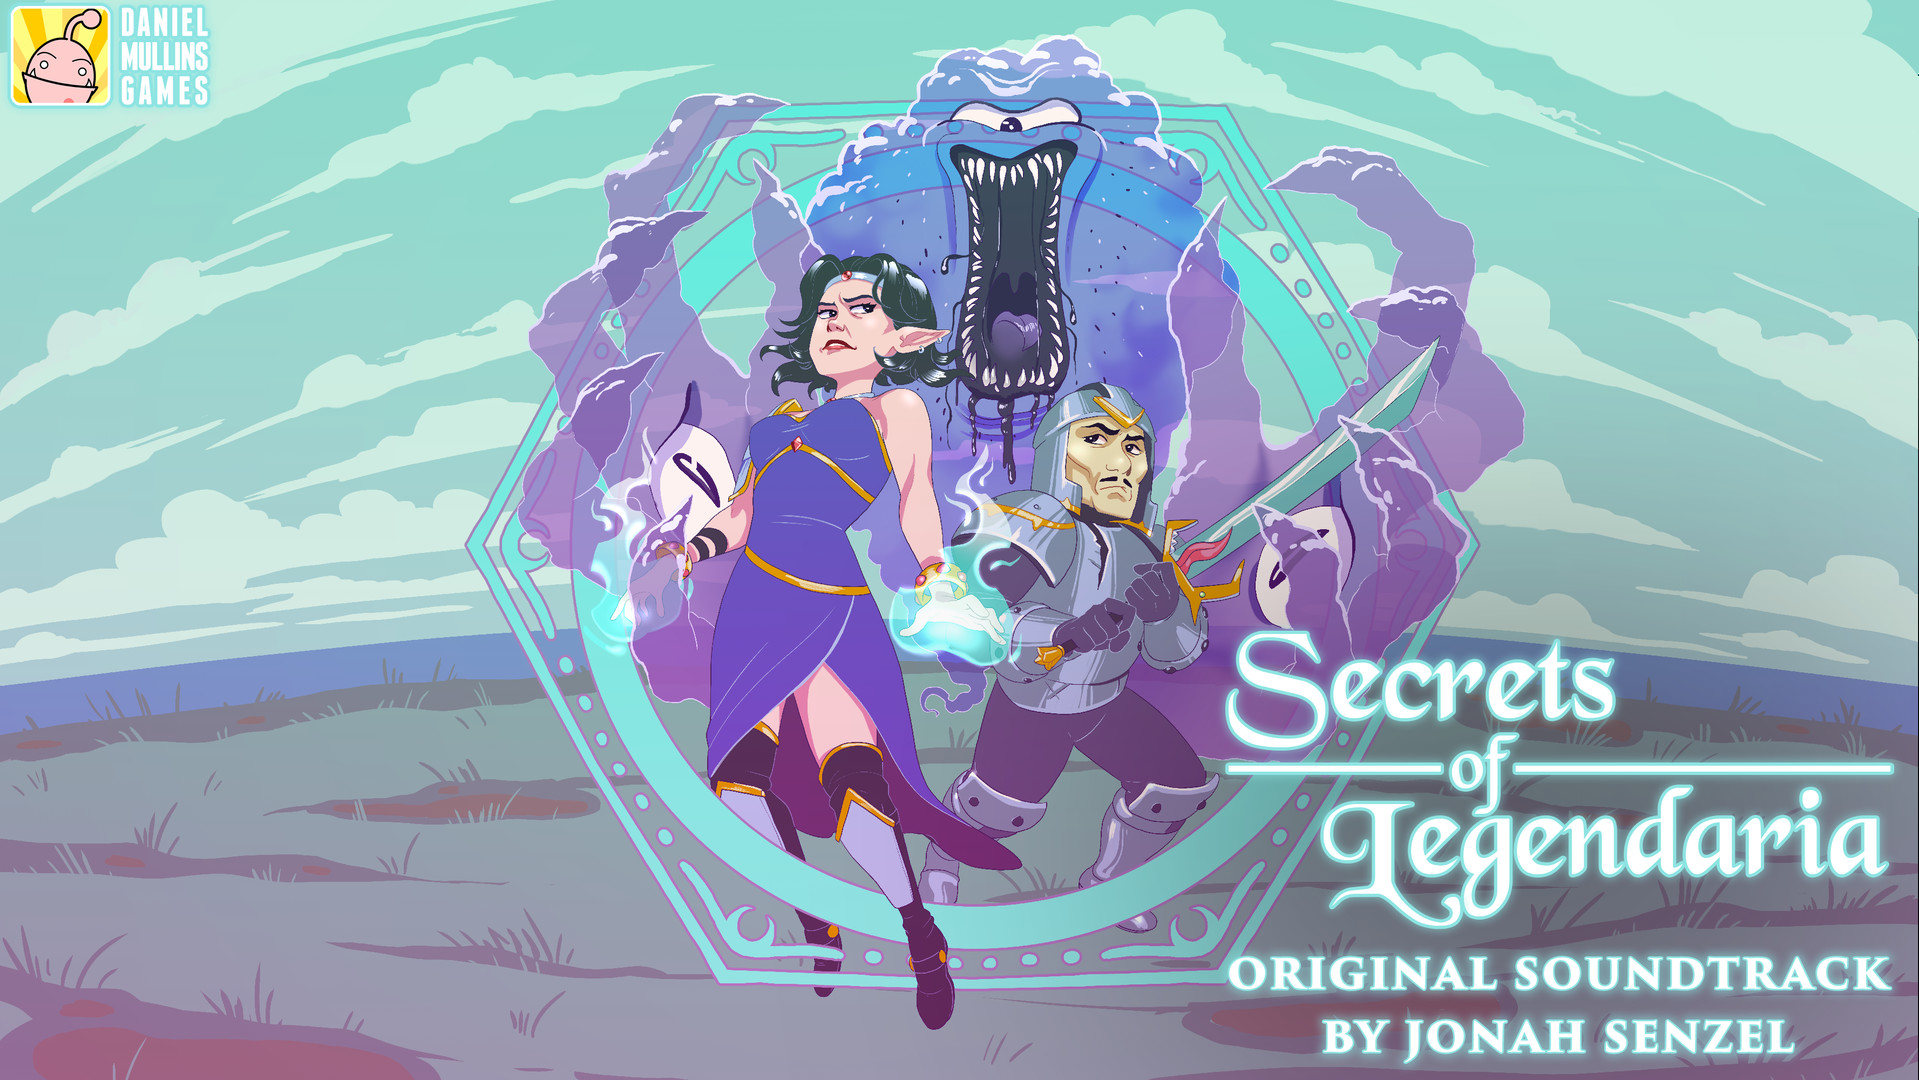 The Hex - "Secrets of Legendaria" Original Soundtrack Featured Screenshot #1